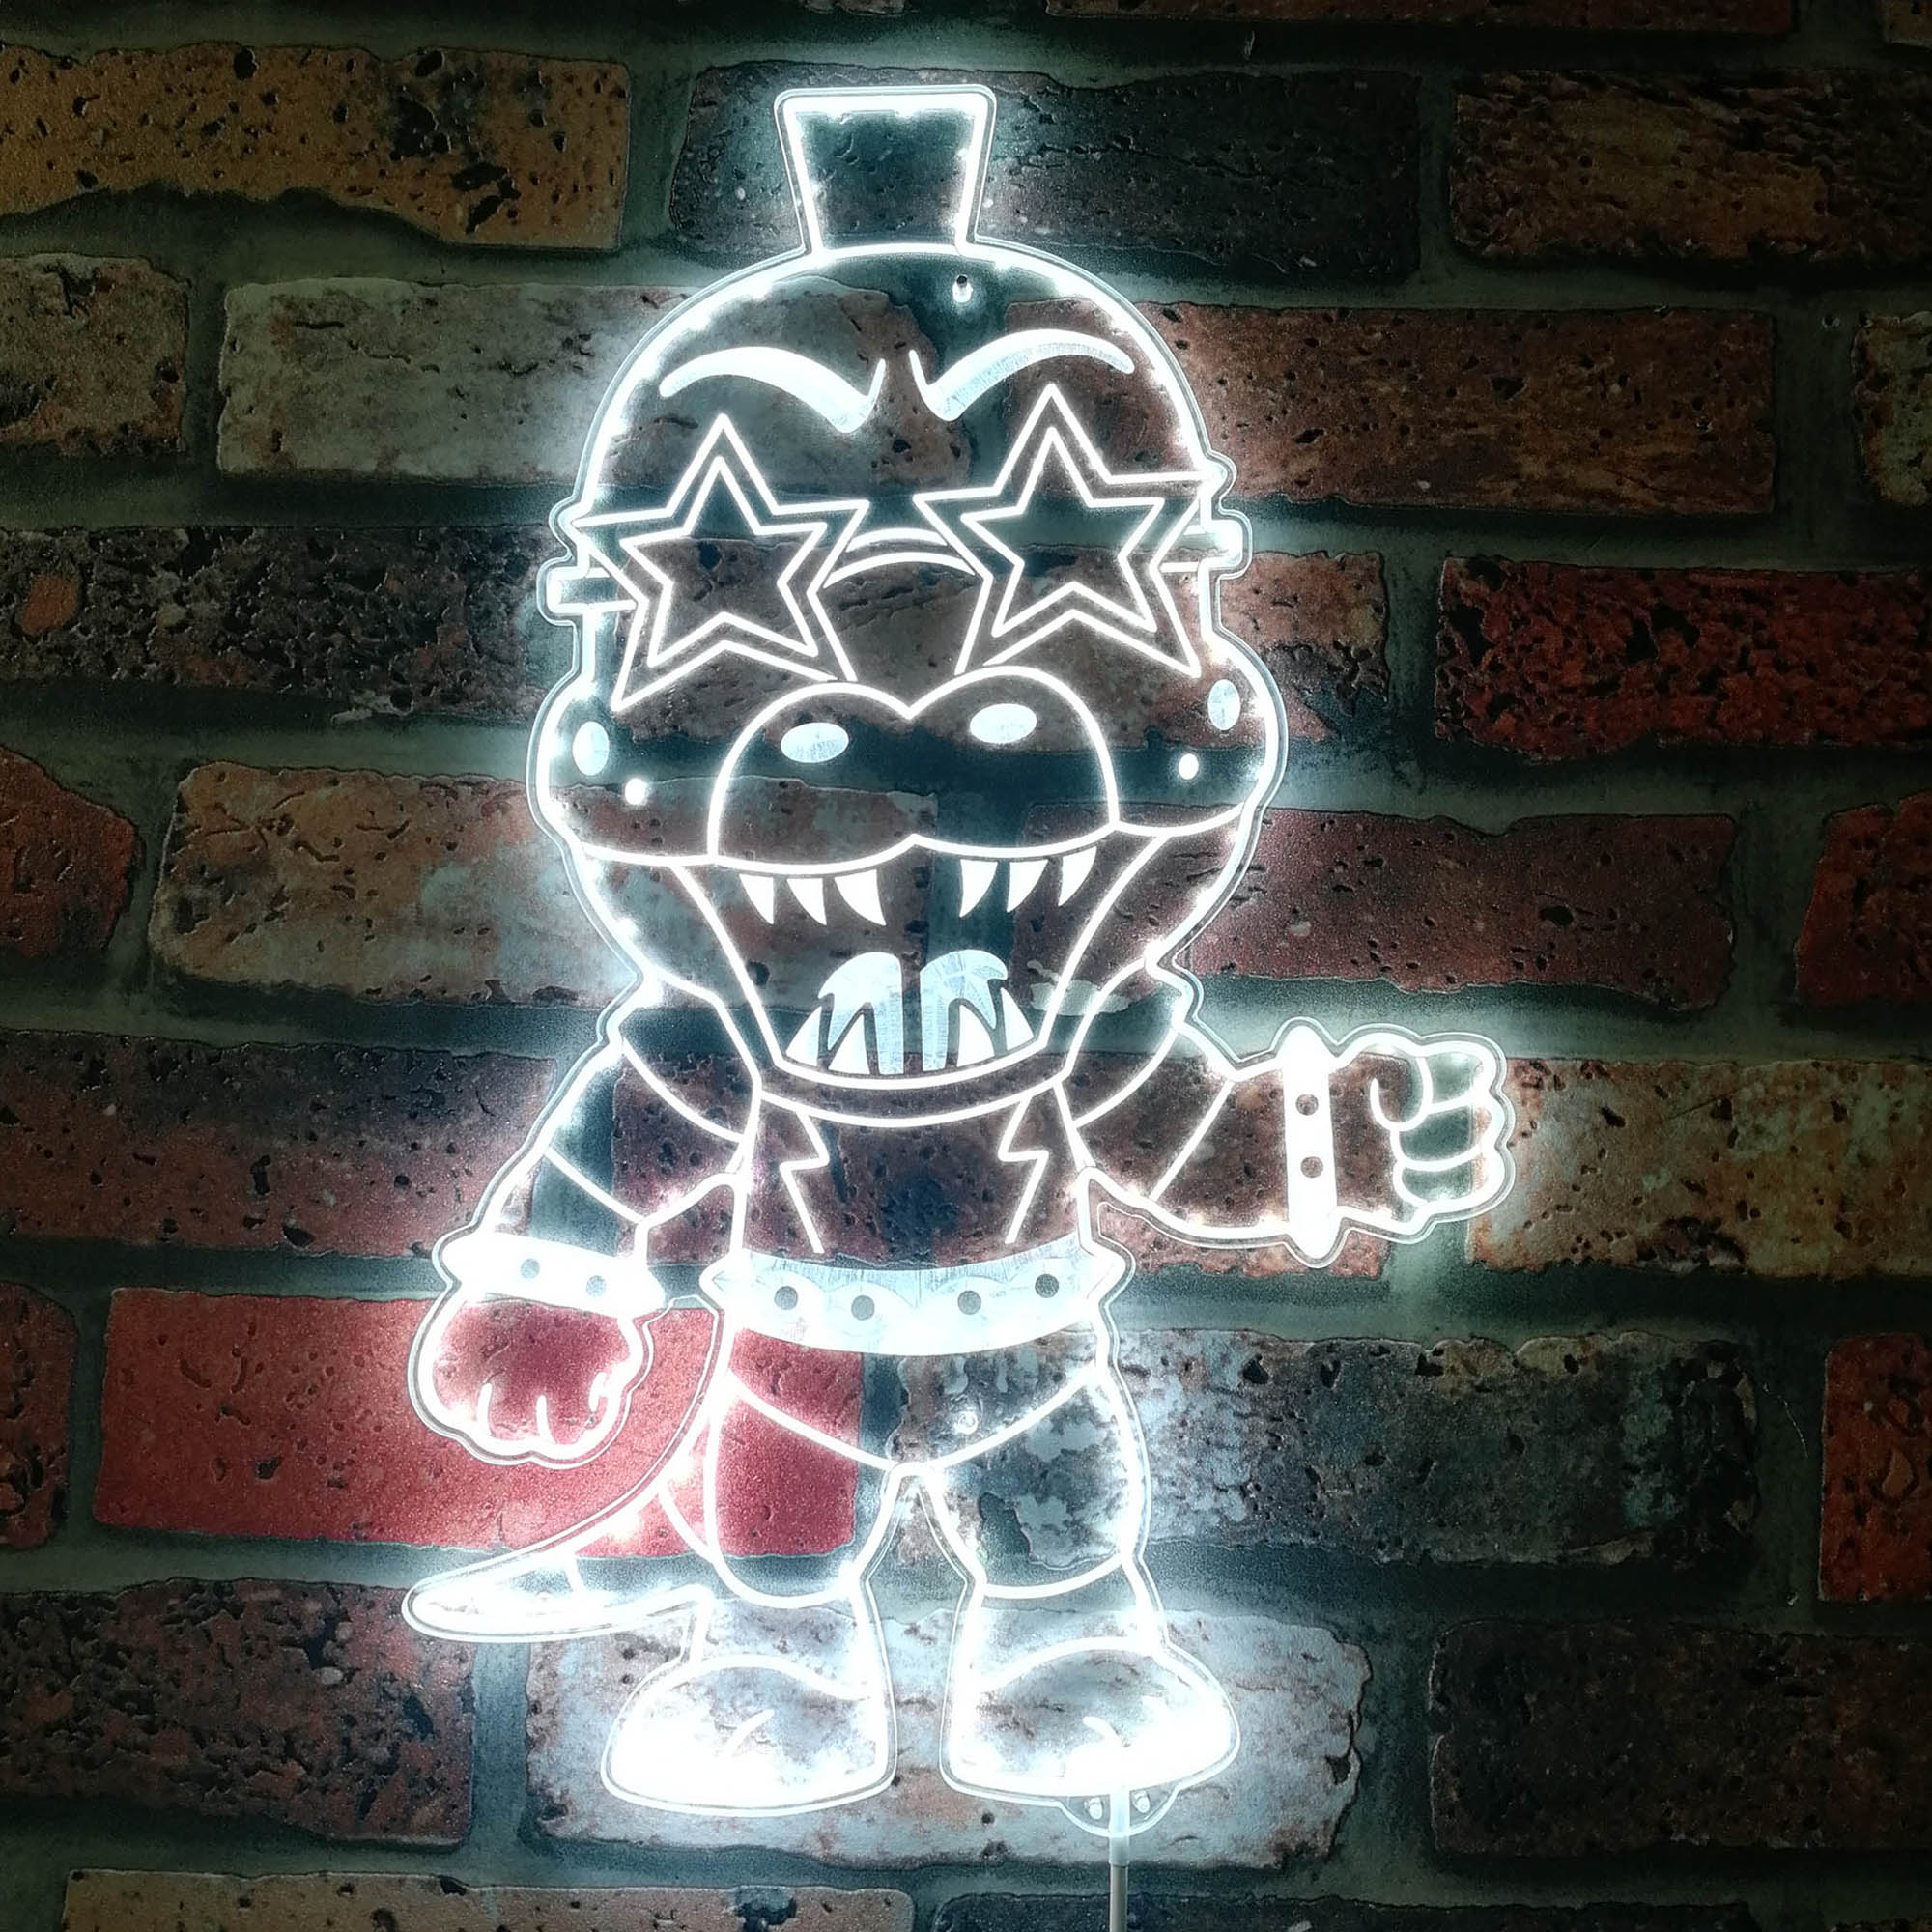 Five nights at Freddy's Monty Gator Dynamic RGB Edge Lit LED Sign